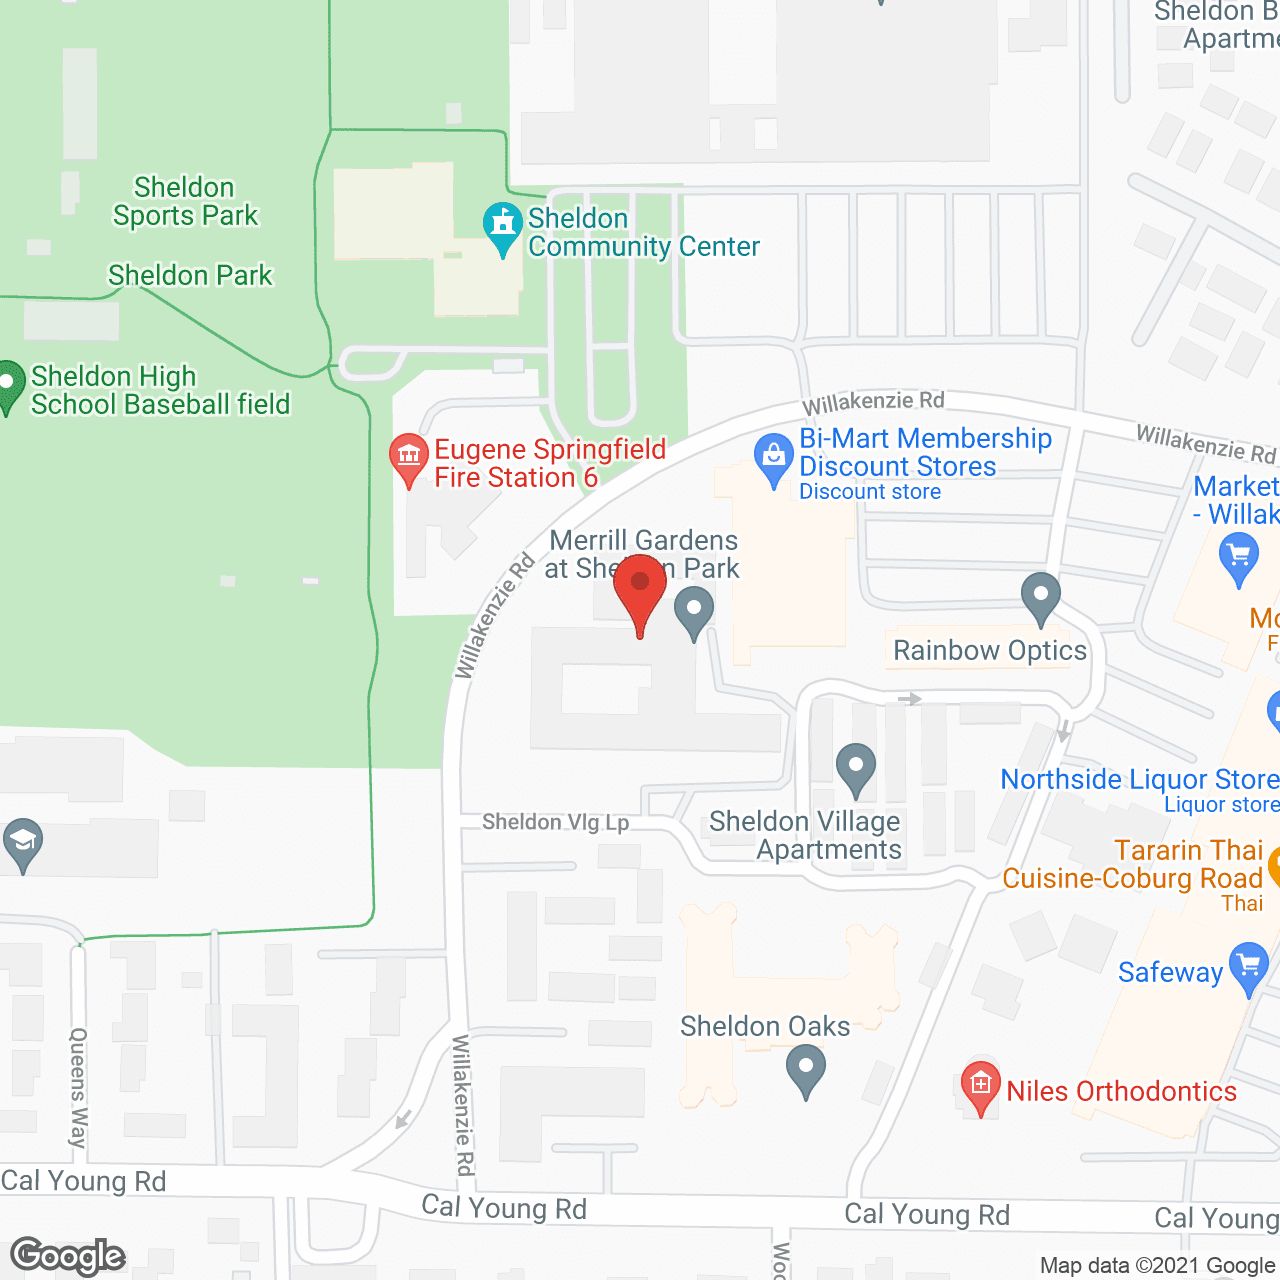 Merrill Gardens at Sheldon Park in google map